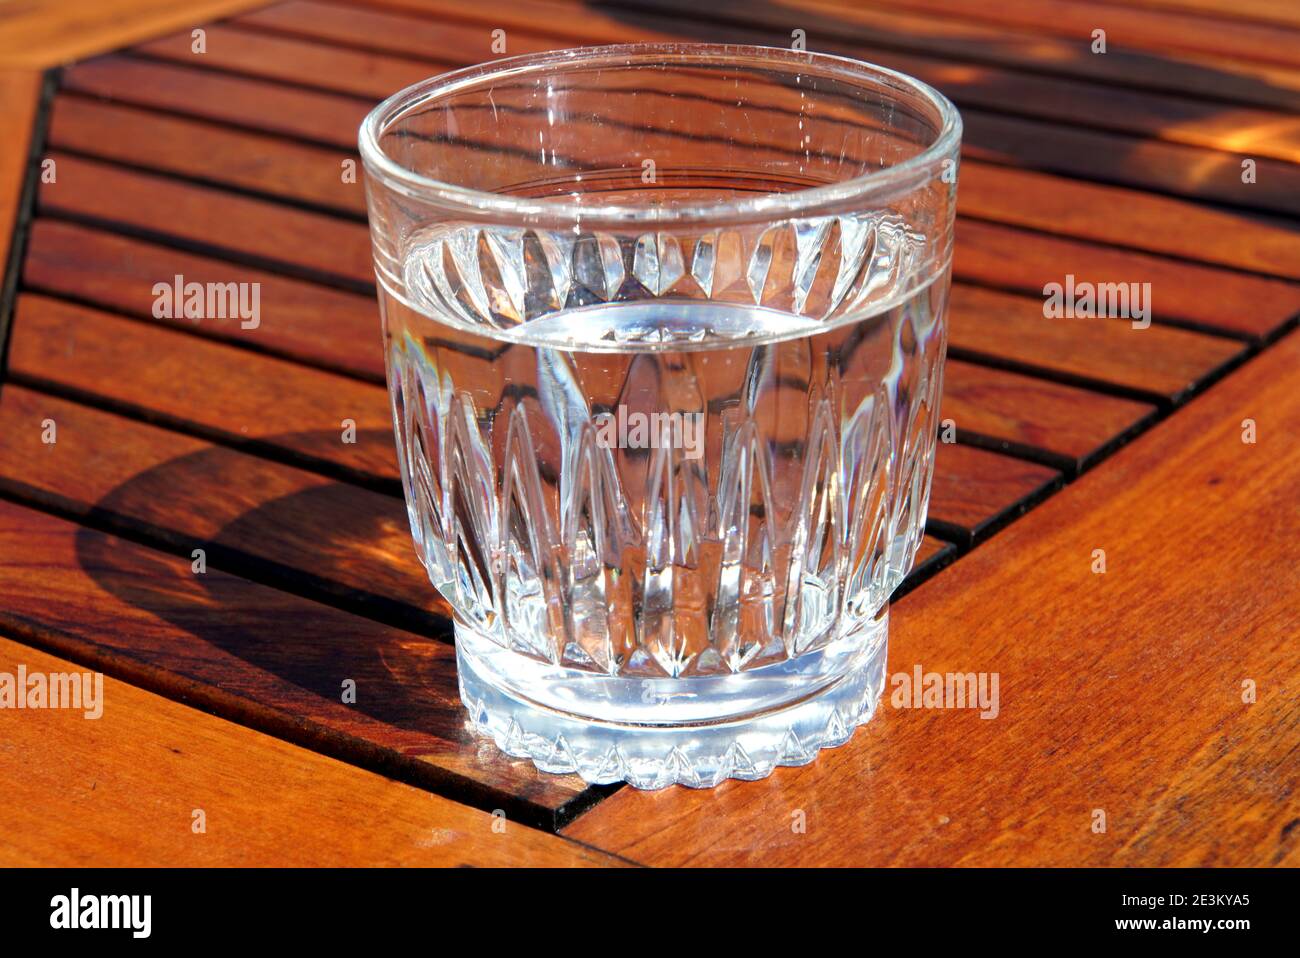 Un cristal transparente lleno de agua en la parte superior de una mesa de madera Foto de stock